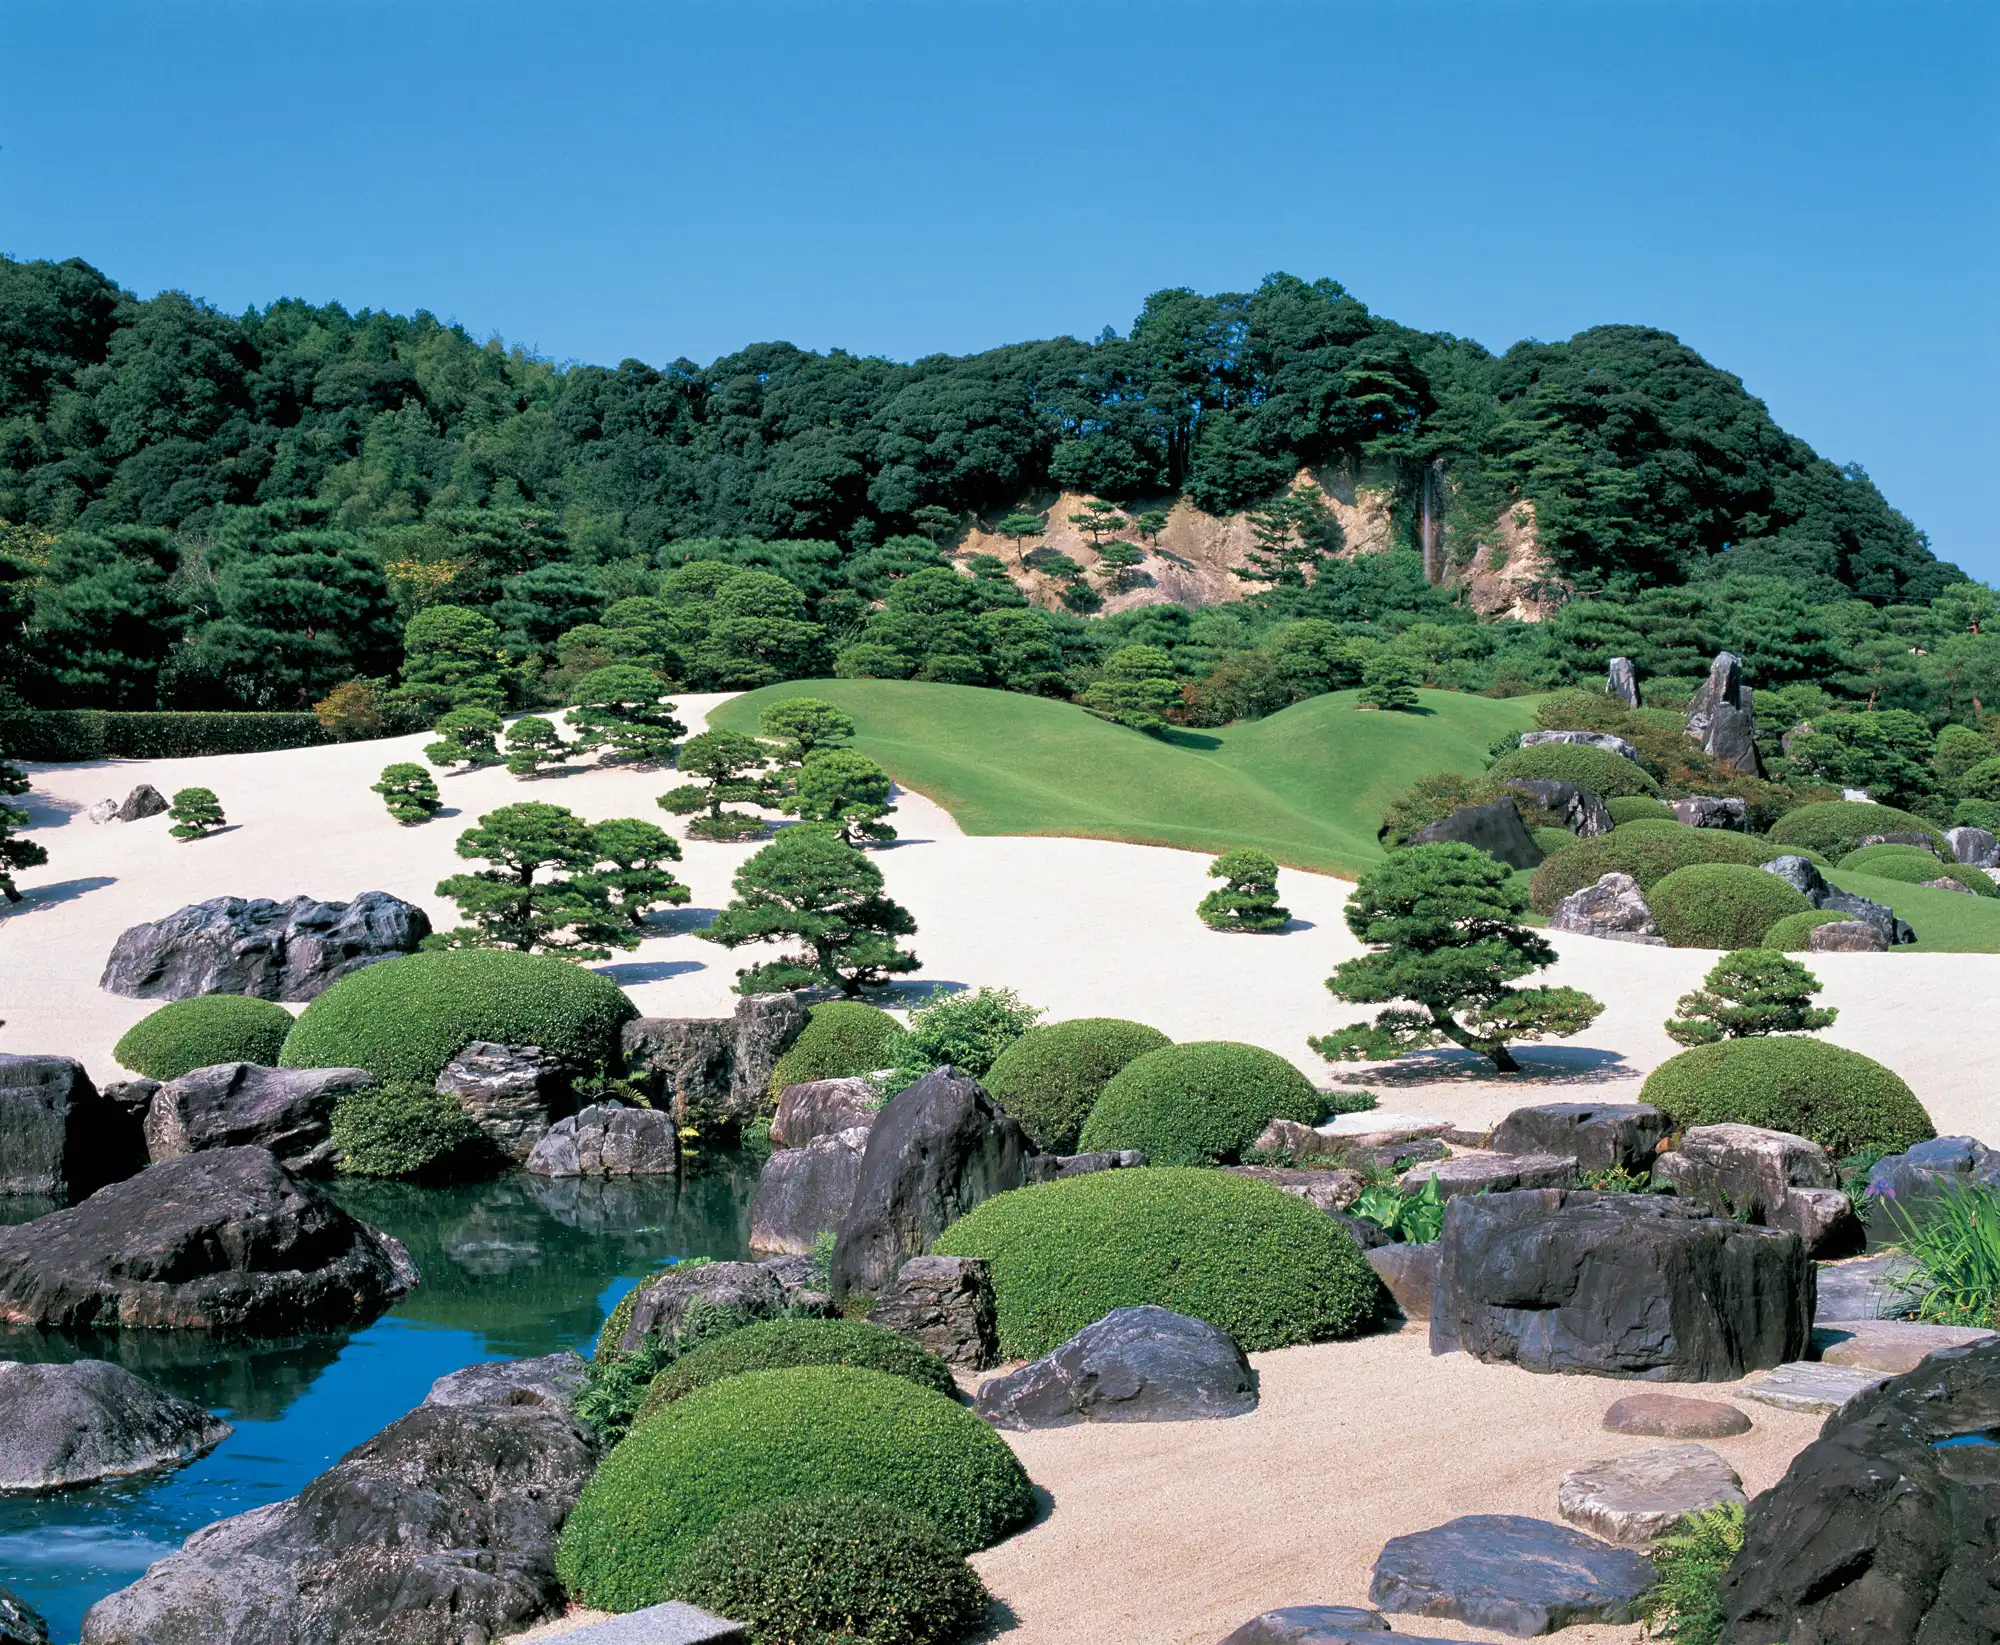 Adachi tourism